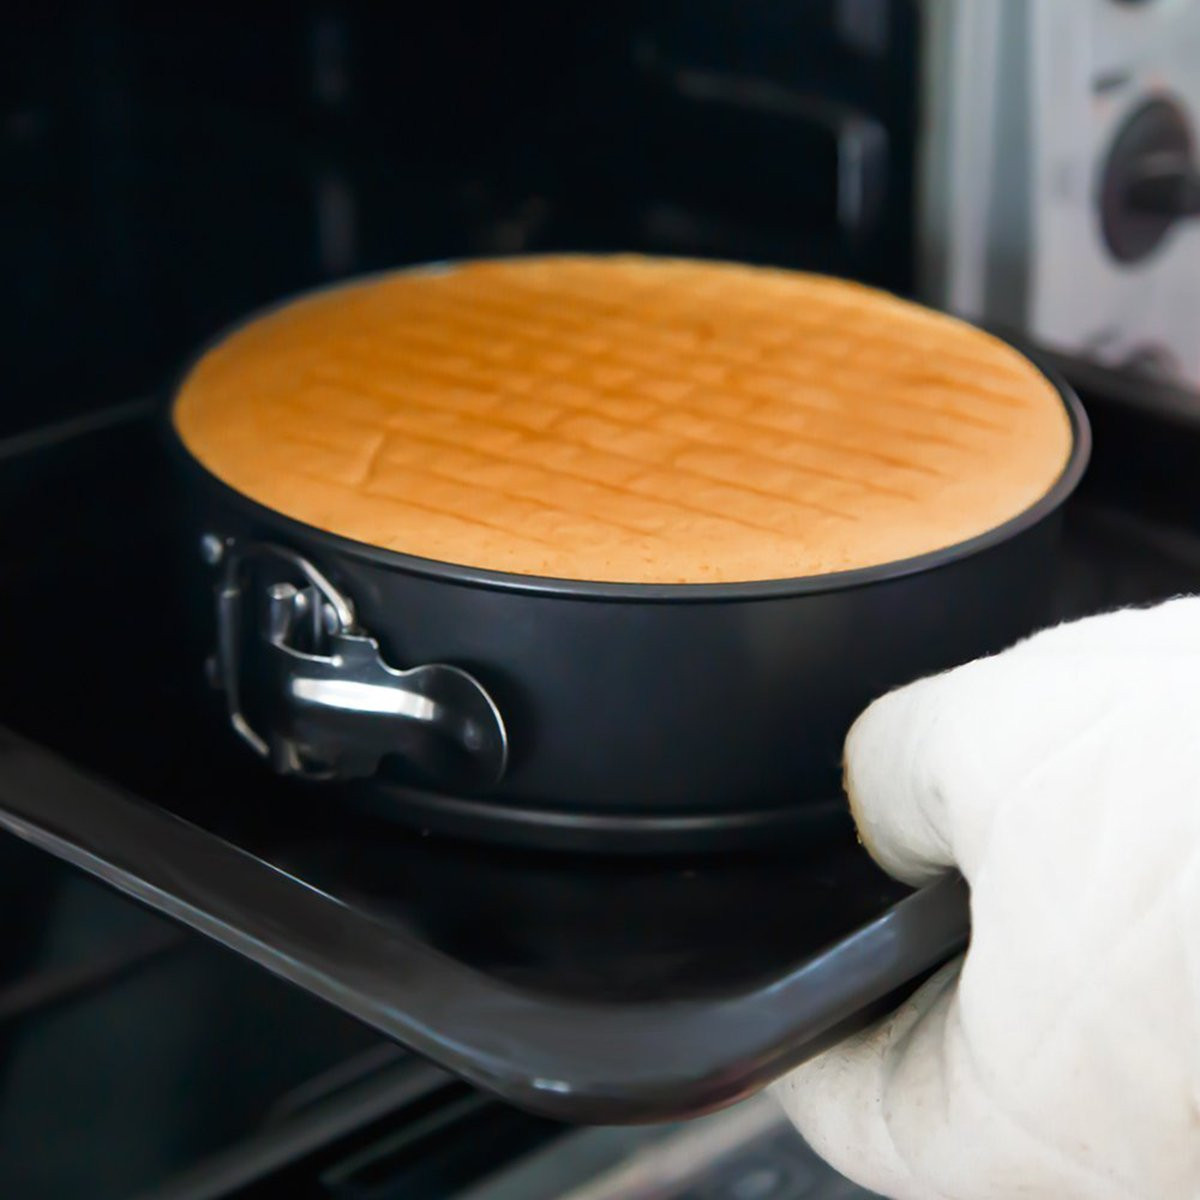 Cheesecake Recipe Springform Pan
 10 Ways to Use a Springform Pan Besides Baking Cheesecake